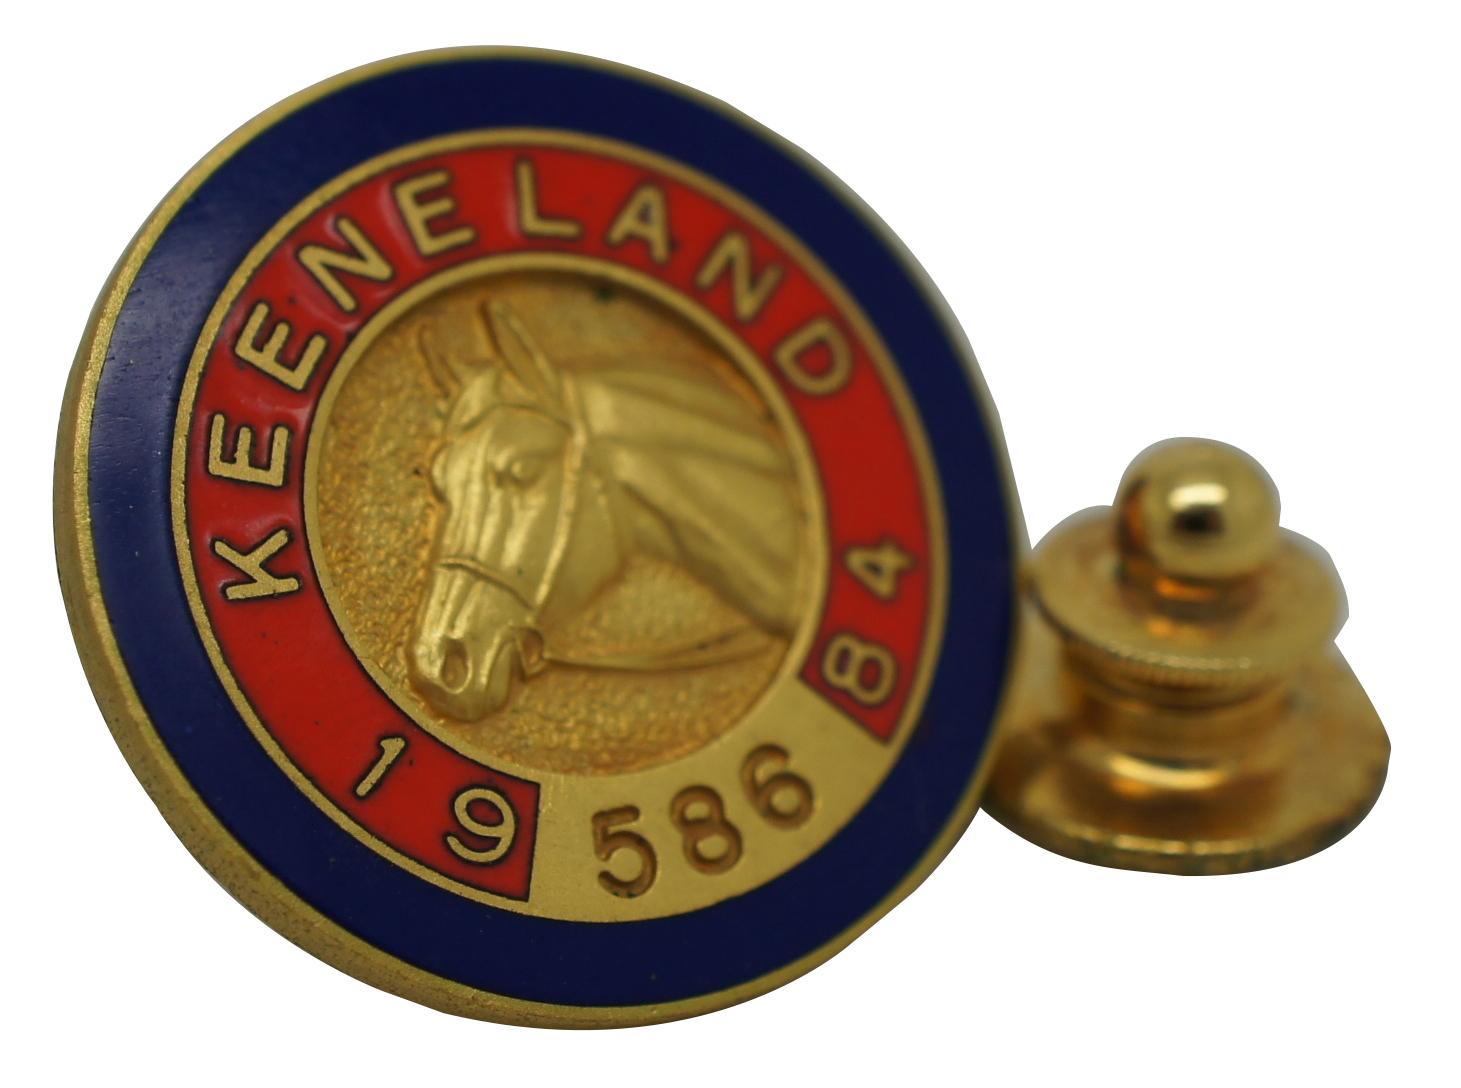 horse racing pin badges